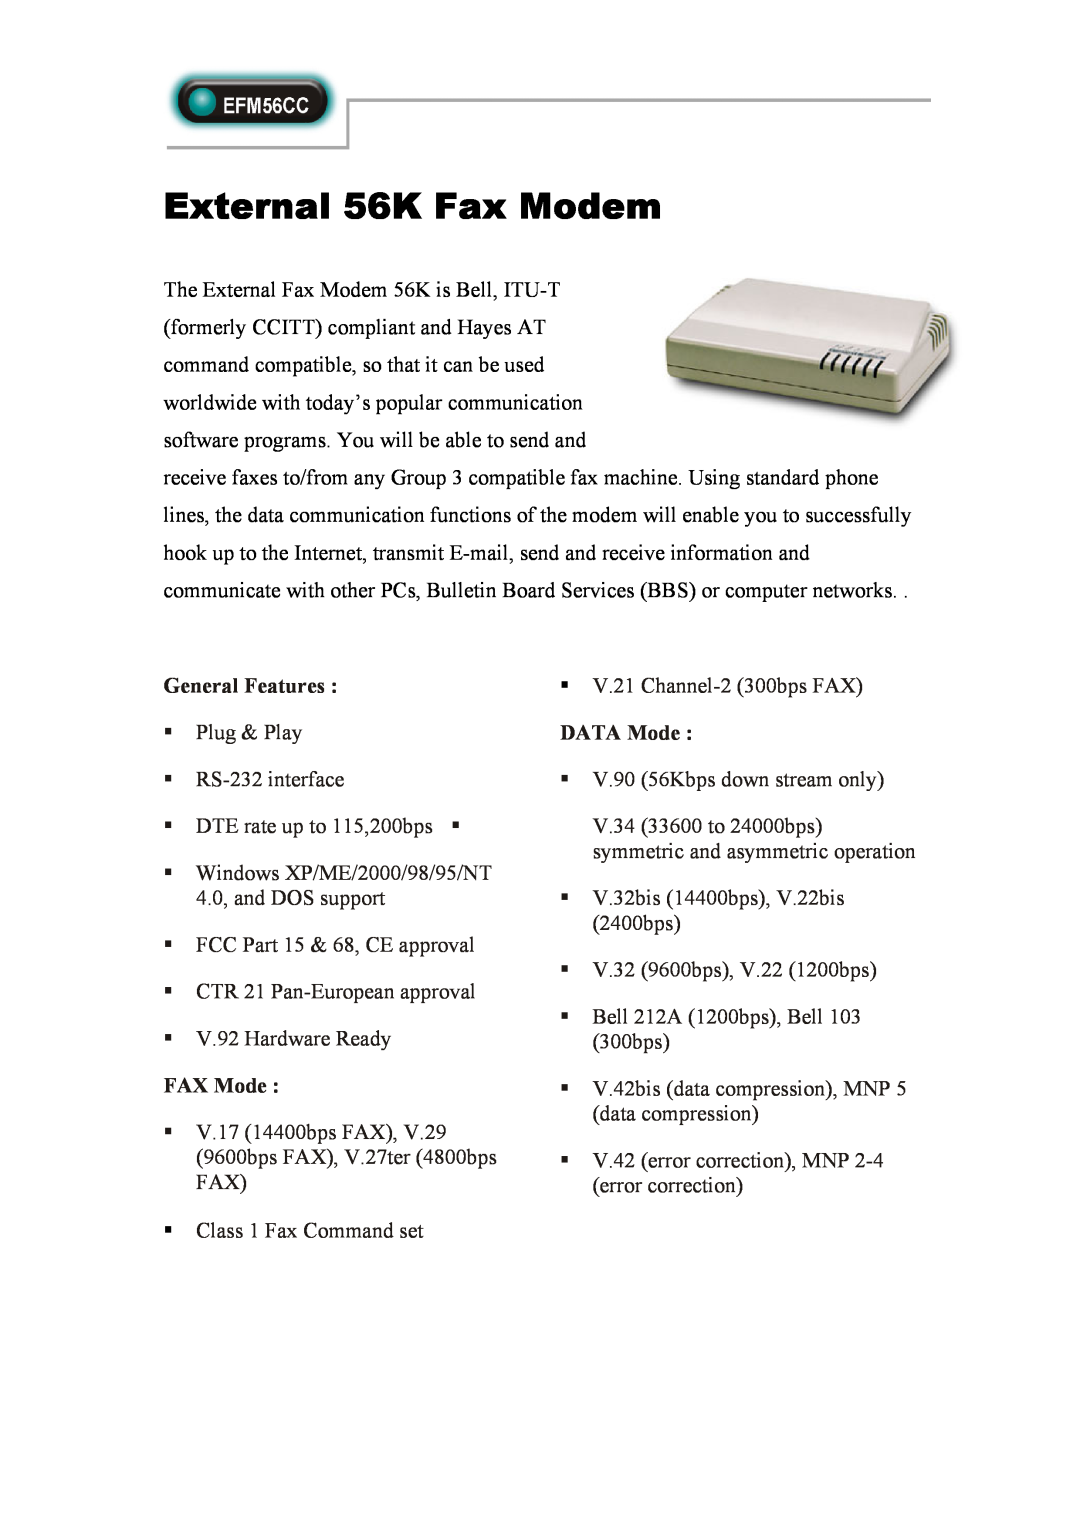 Abocom EFM56CC manual External 56K Fax Modem, General Features, FAX Mode, DATA Mode 